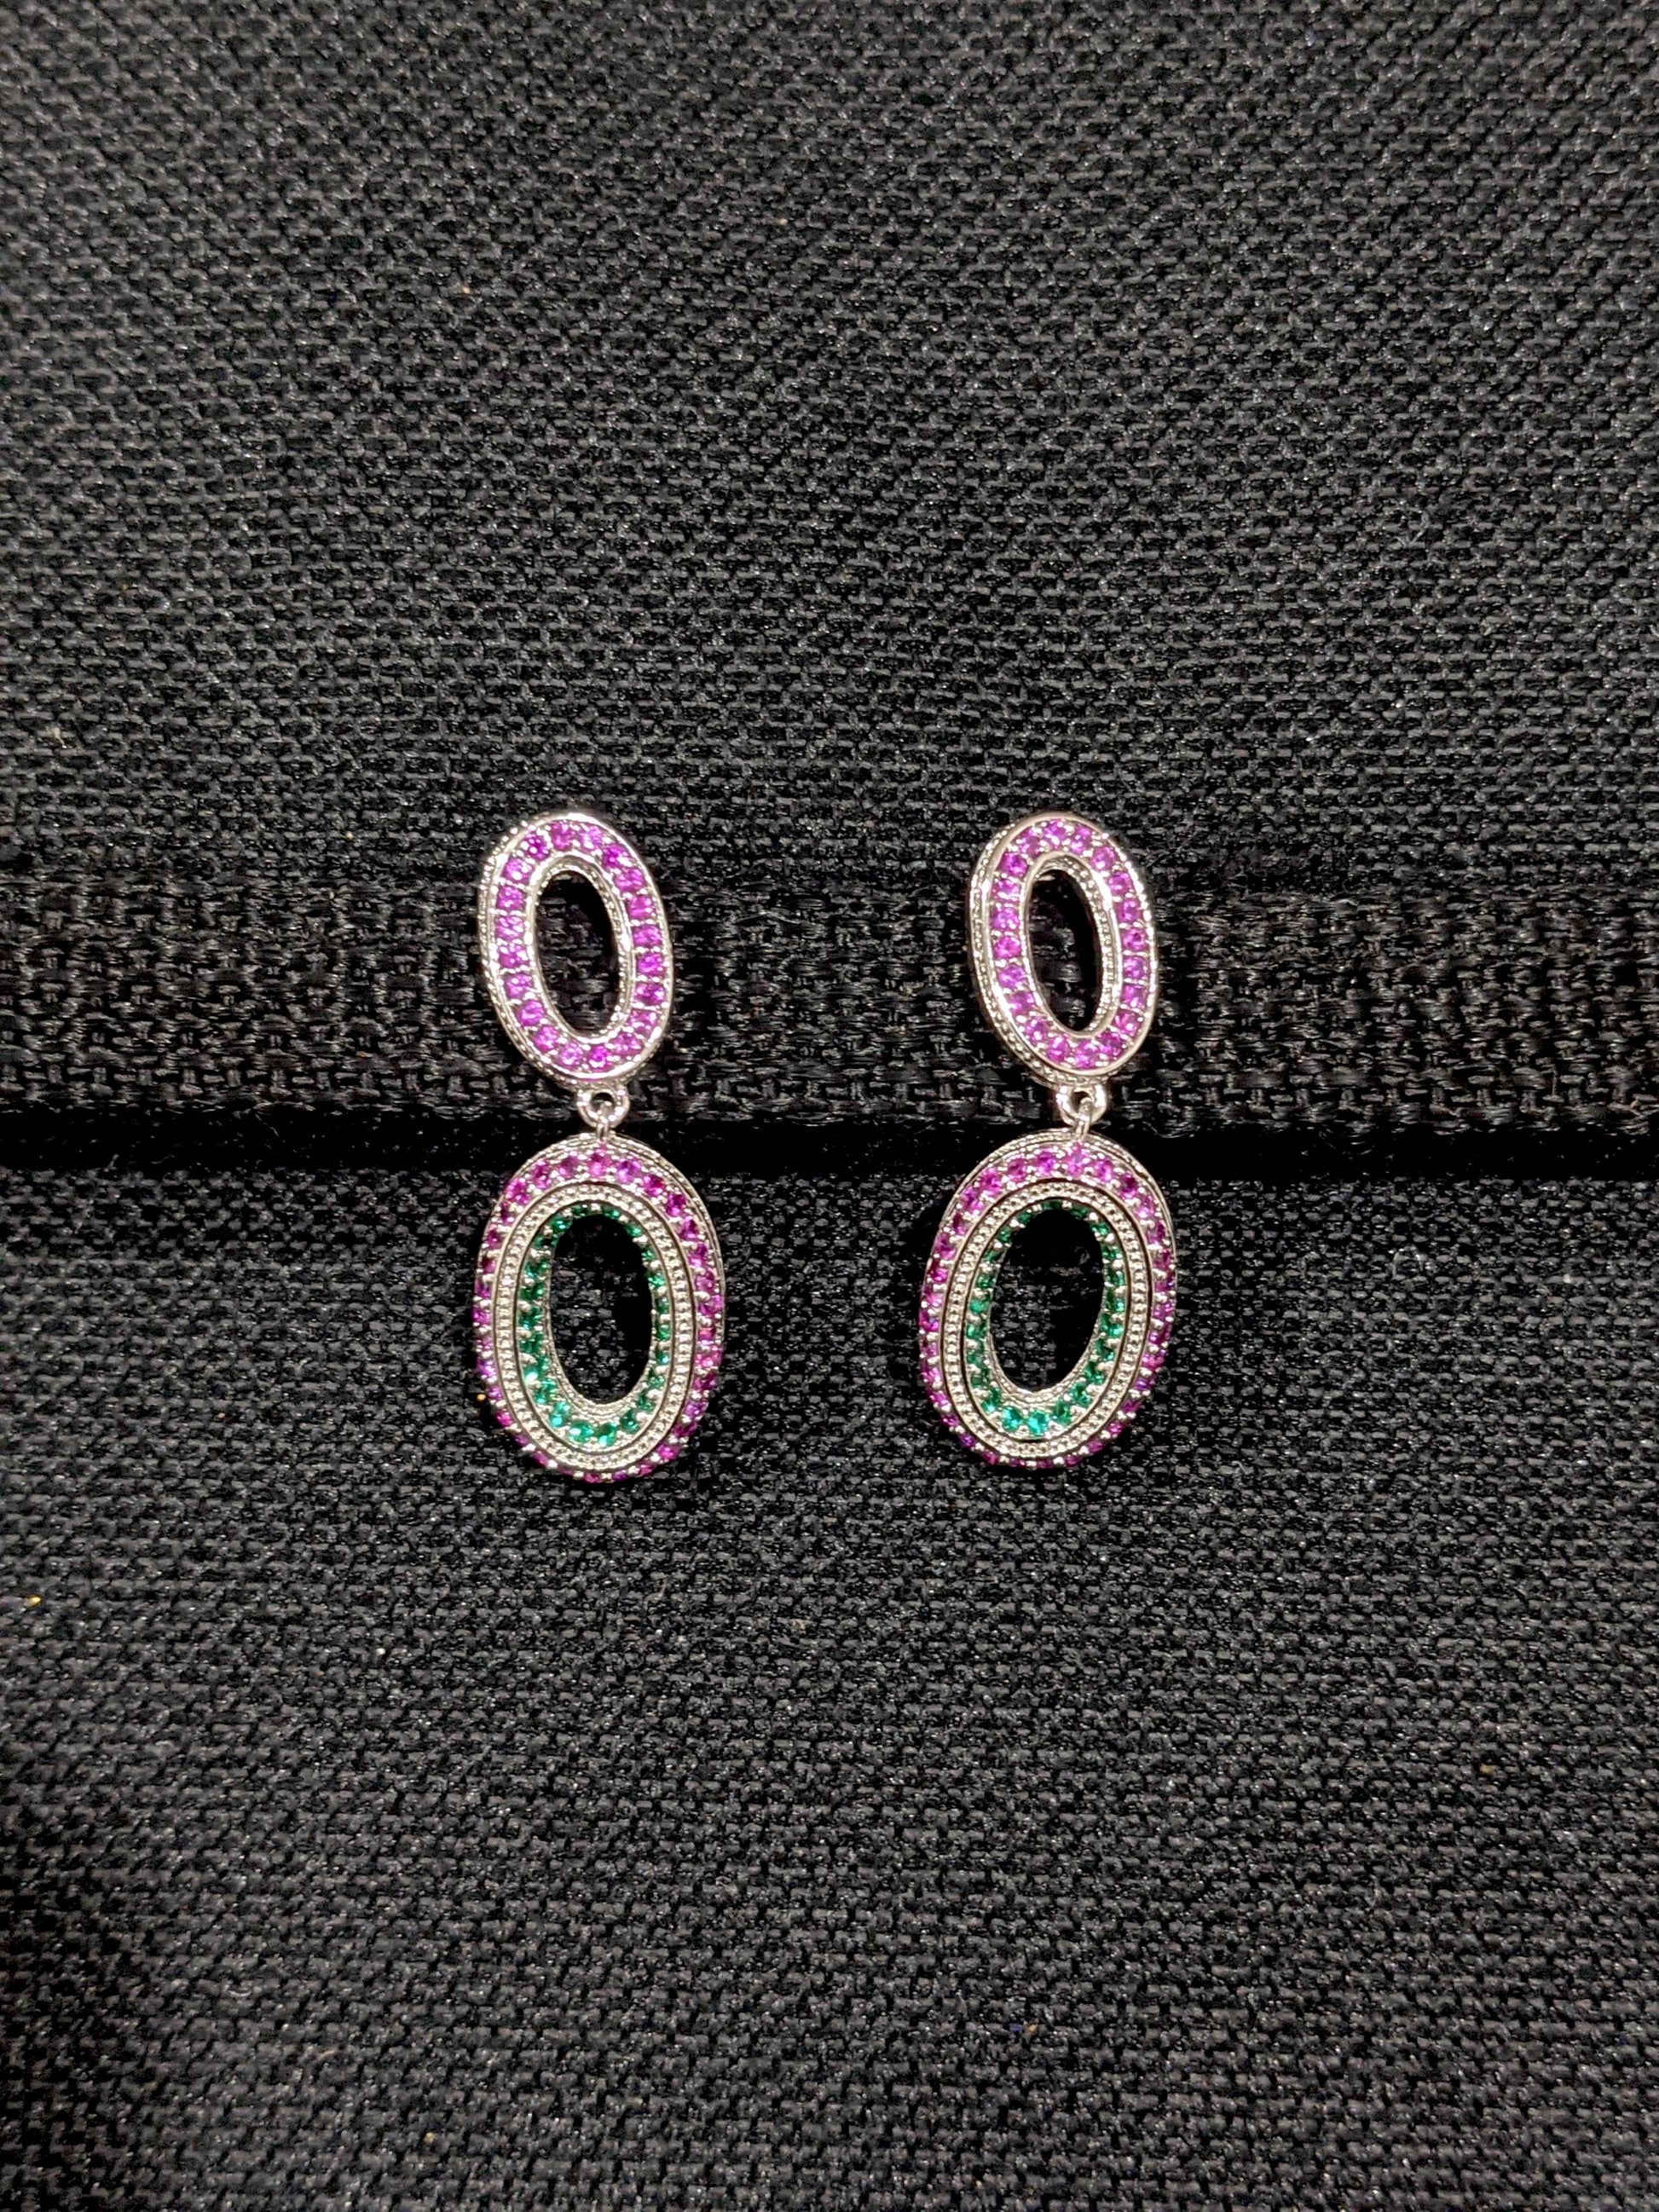 Dual oval design platinum finish micro cz stone designer earrings - Simpliful